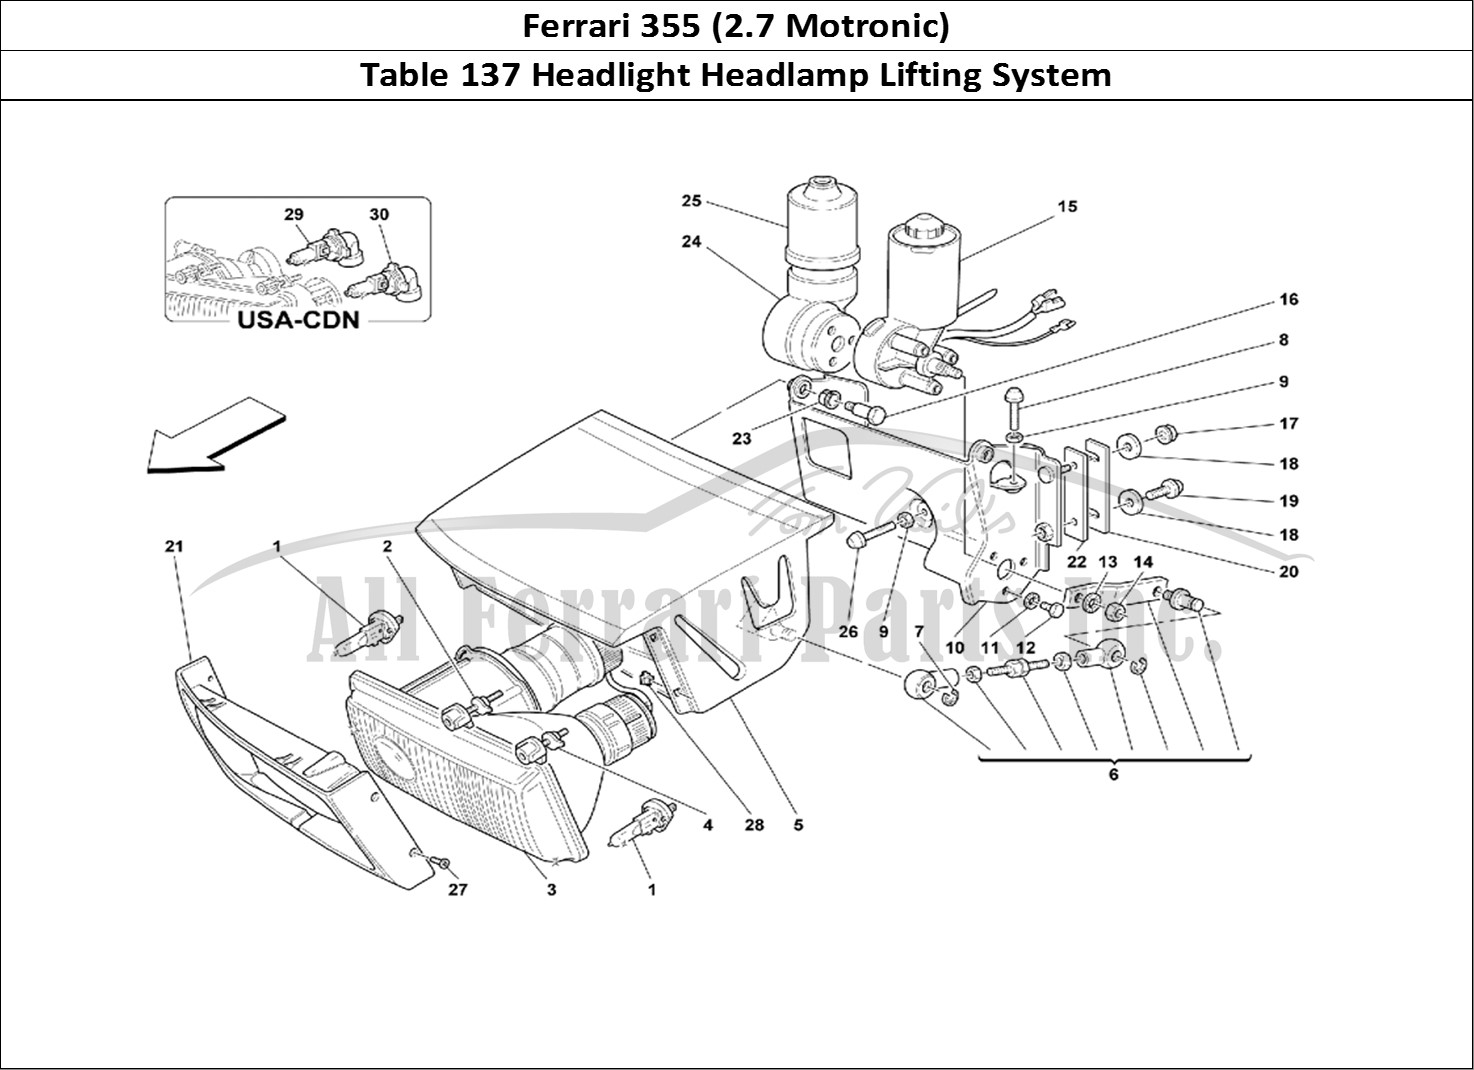 Ferrari Parts Ferrari 355 (2.7 Motronic) Page 137 Lights Lifting Device and